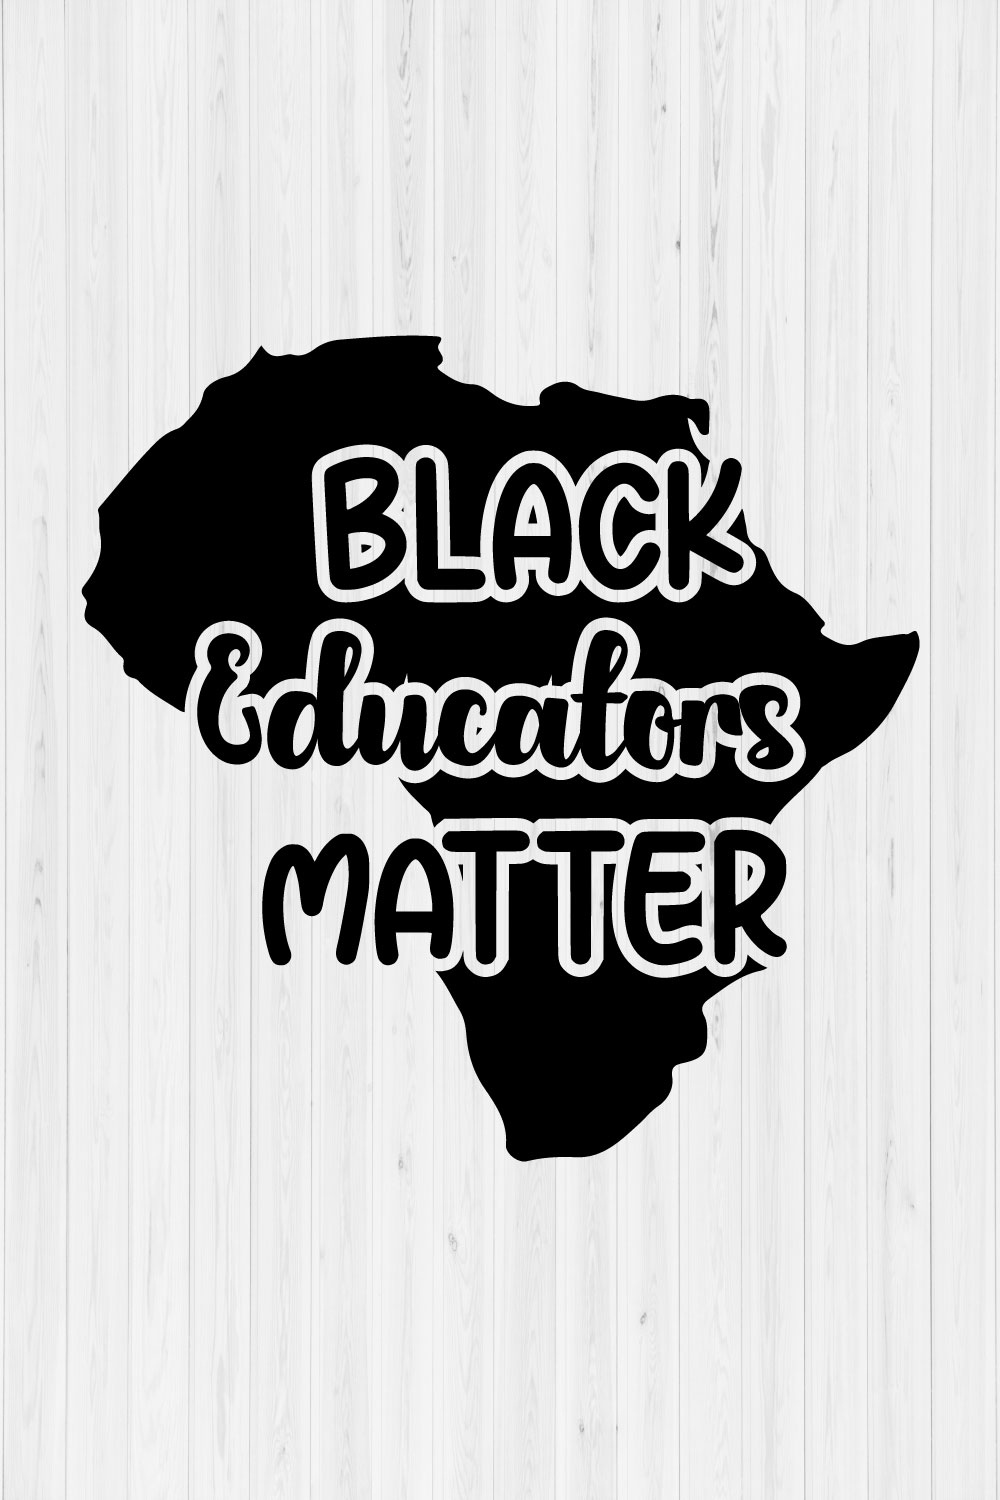 Black Educators Matter pinterest preview image.